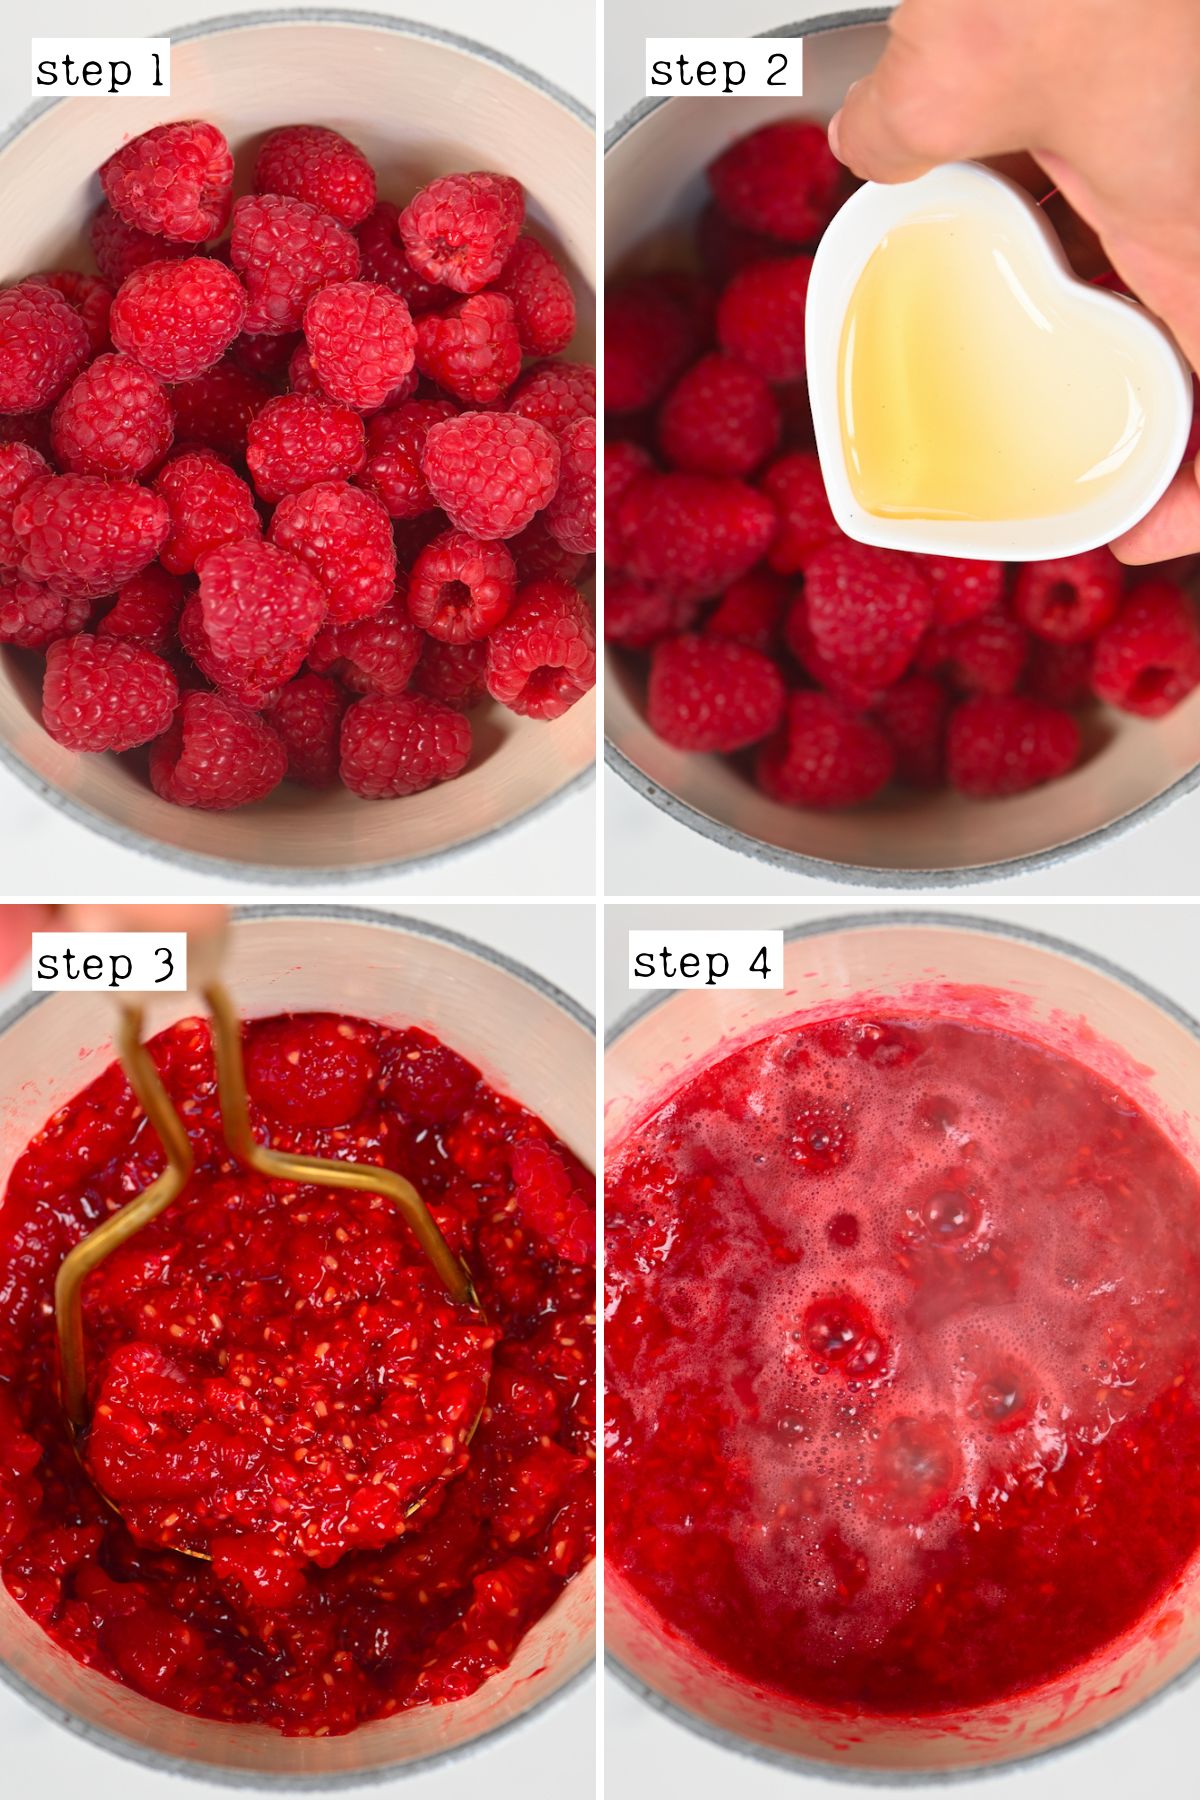 Steps for preparing raspberry salad dressing